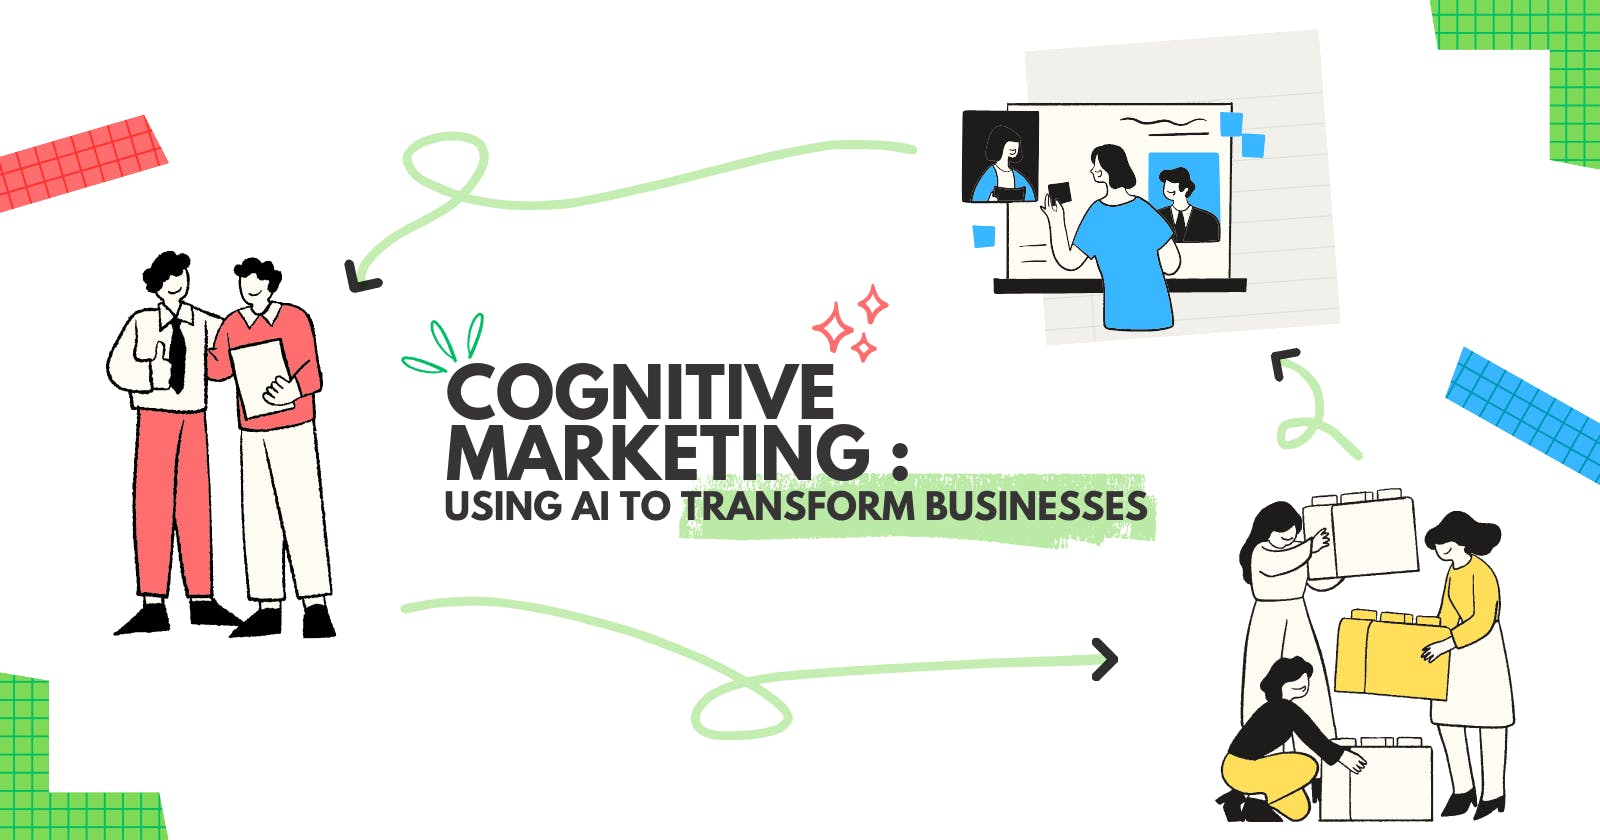 Cognitive Marketing:
Using AI to Transform Businesses